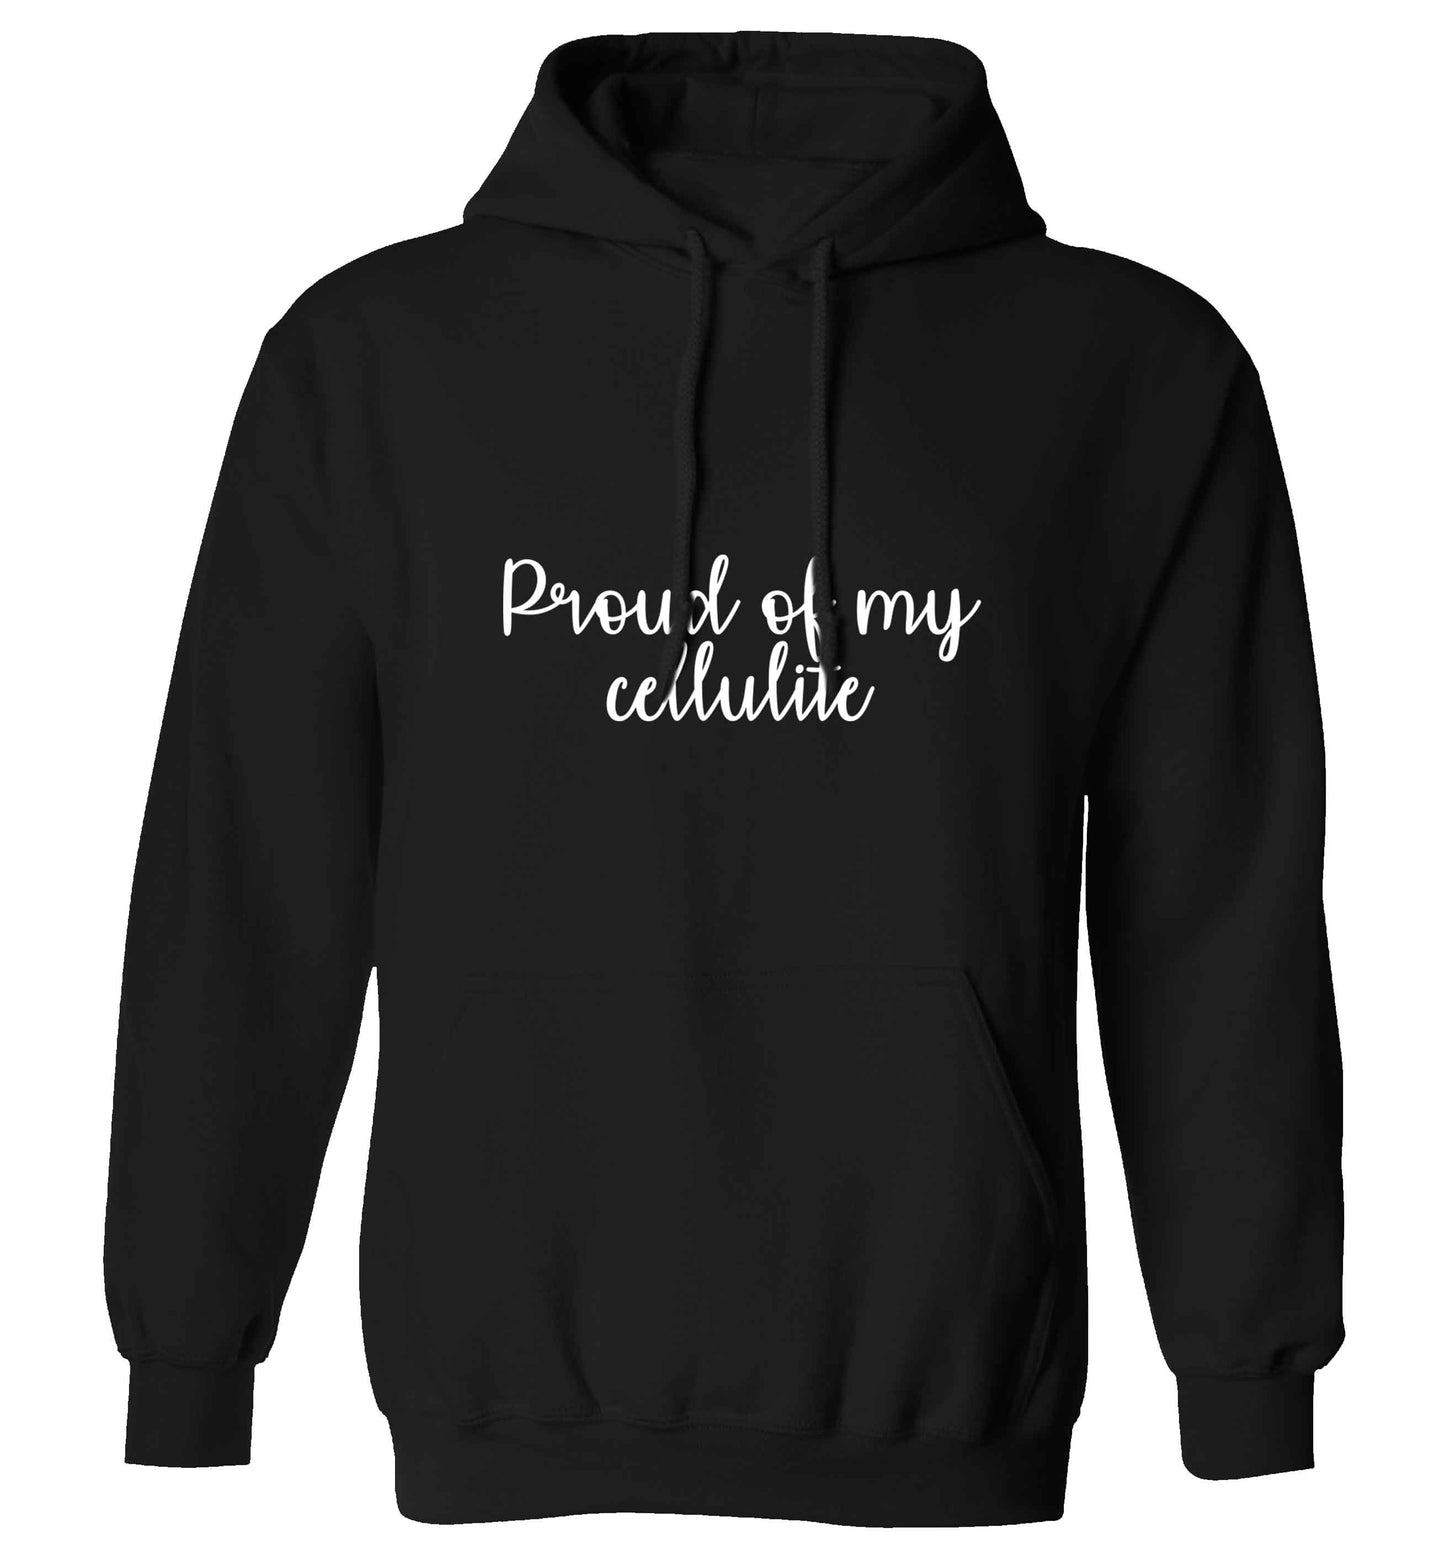 Proud of my cellulite adults unisex black hoodie 2XL